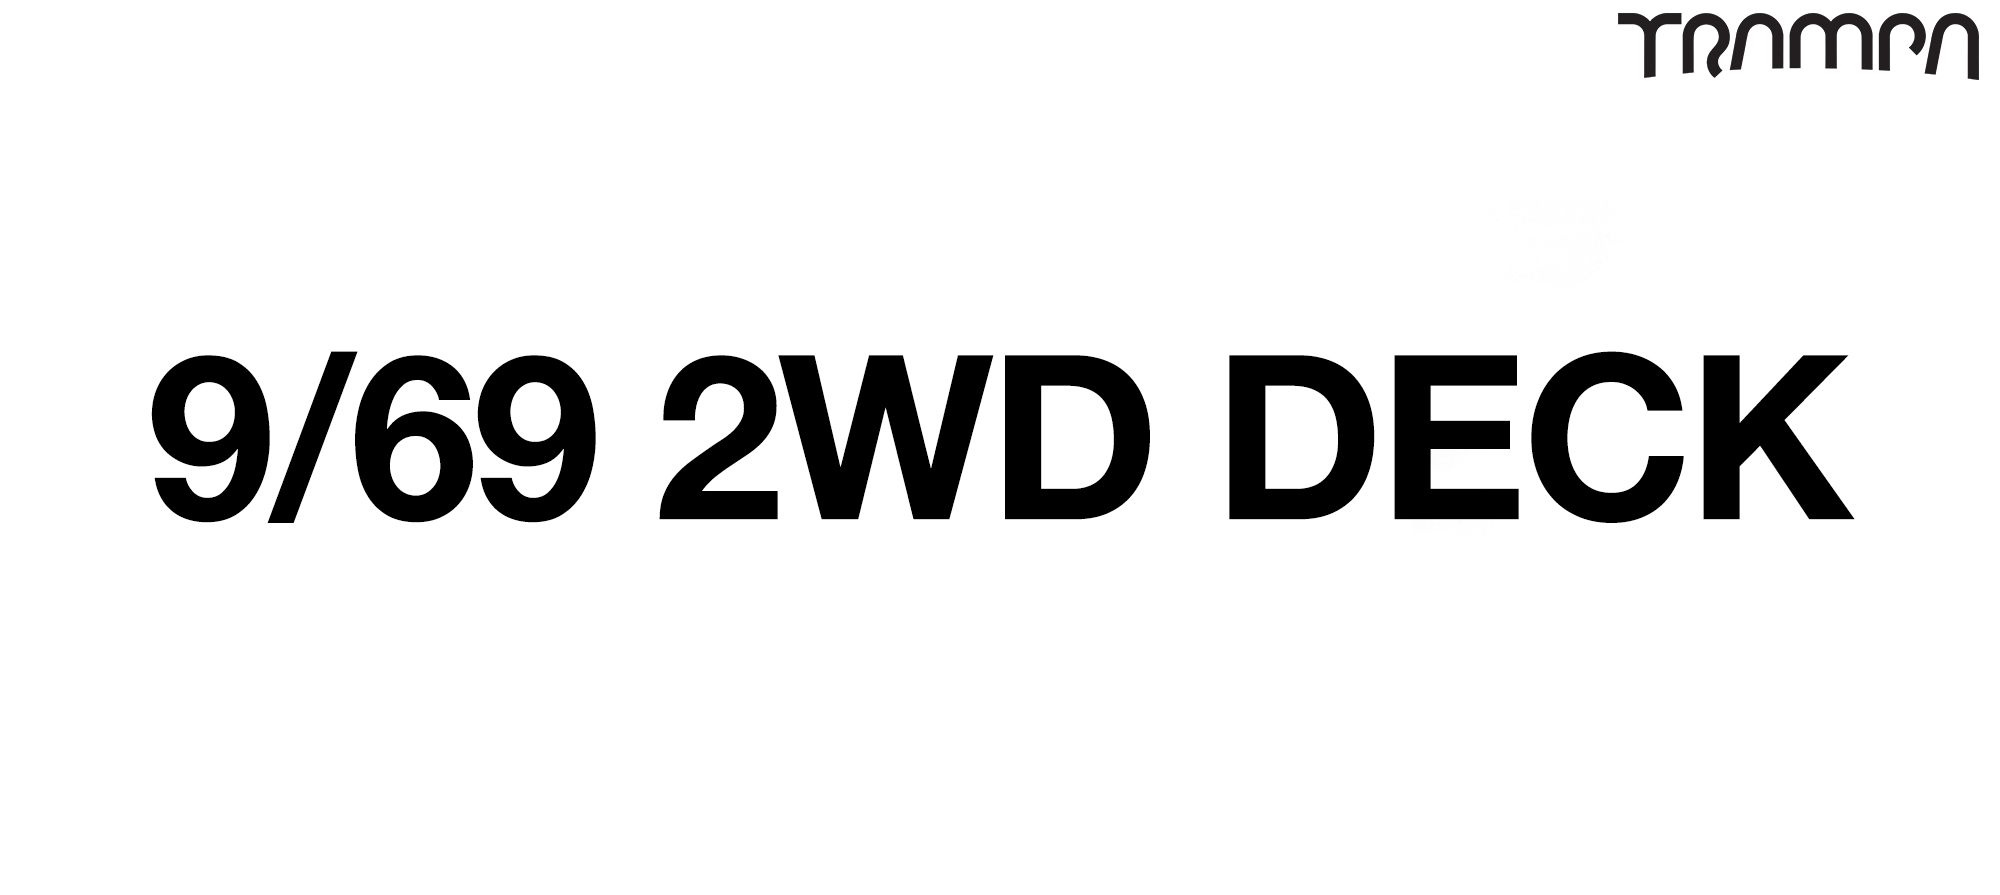 9/69 2WD DECK